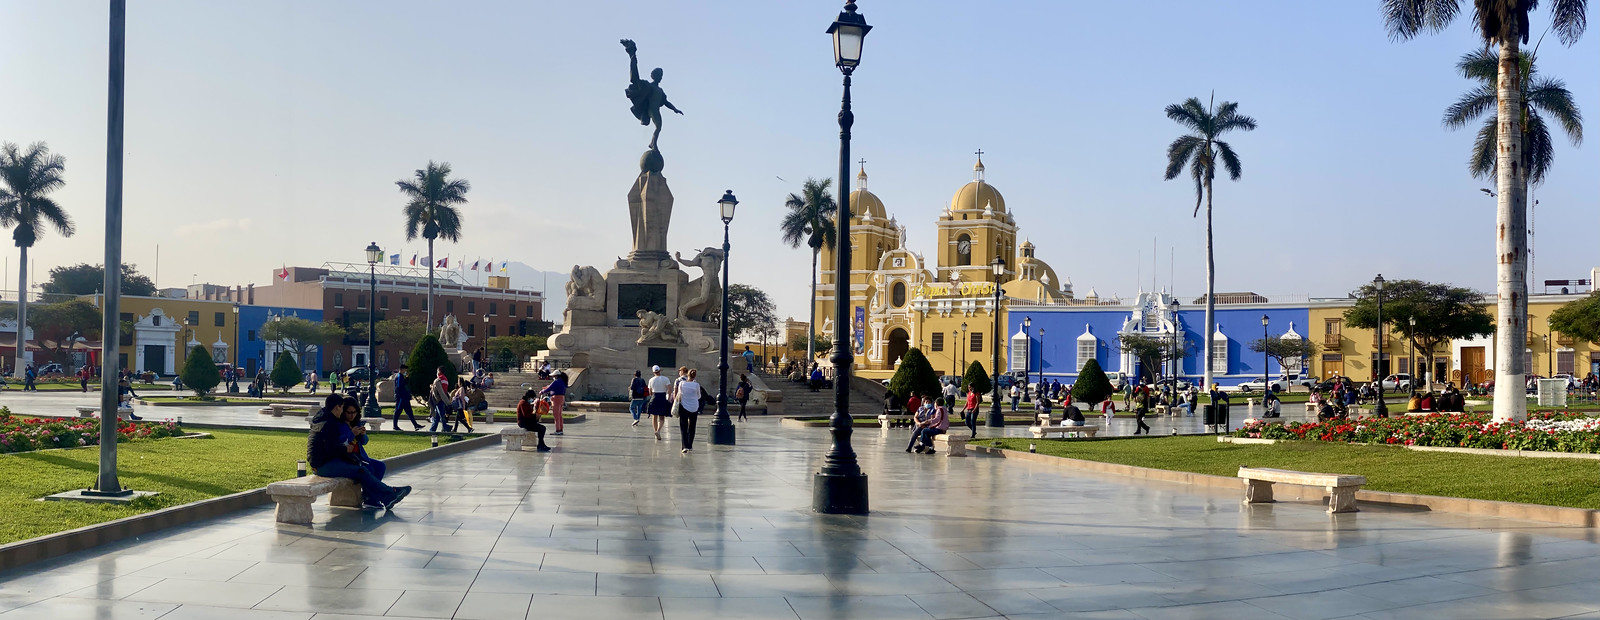 Plaza de Armas de Trujillo, Peru